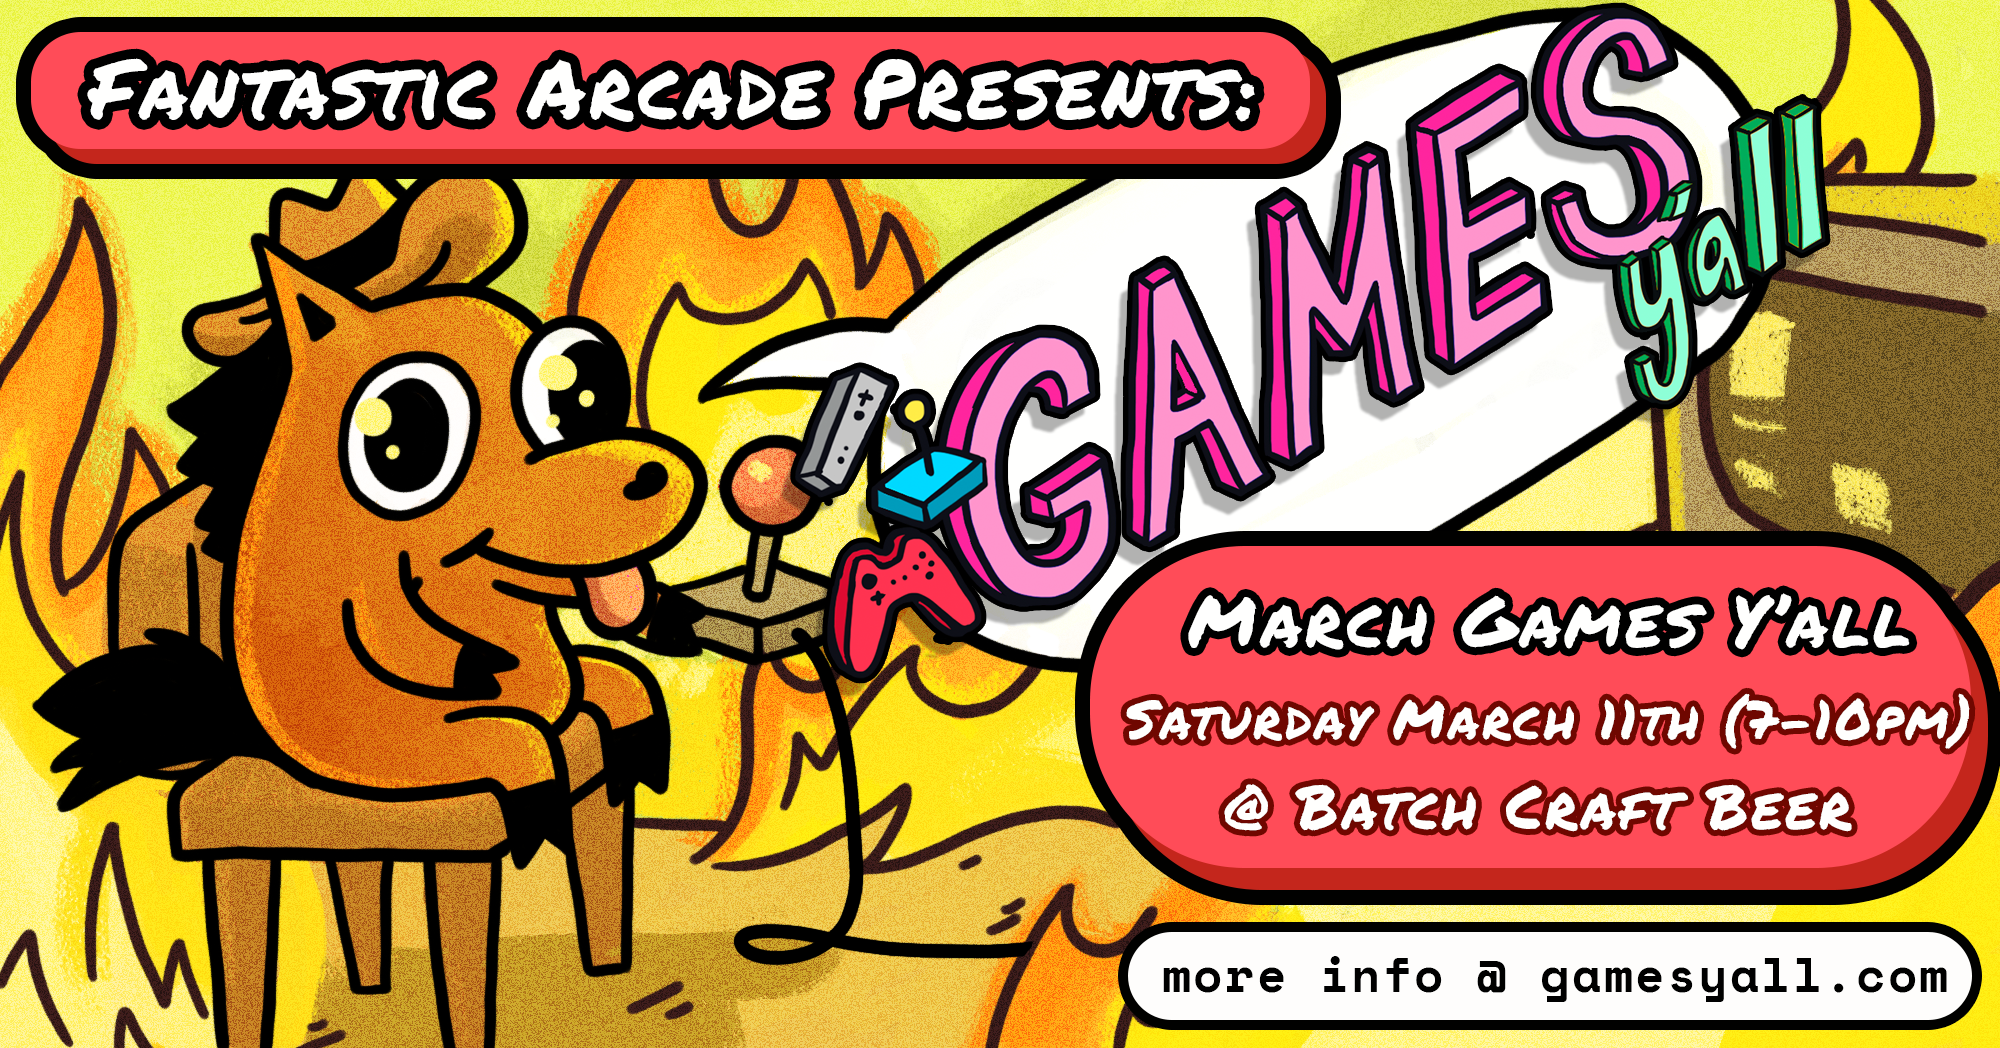 Fantastic Arcade presents, Games Y'all March Meetup